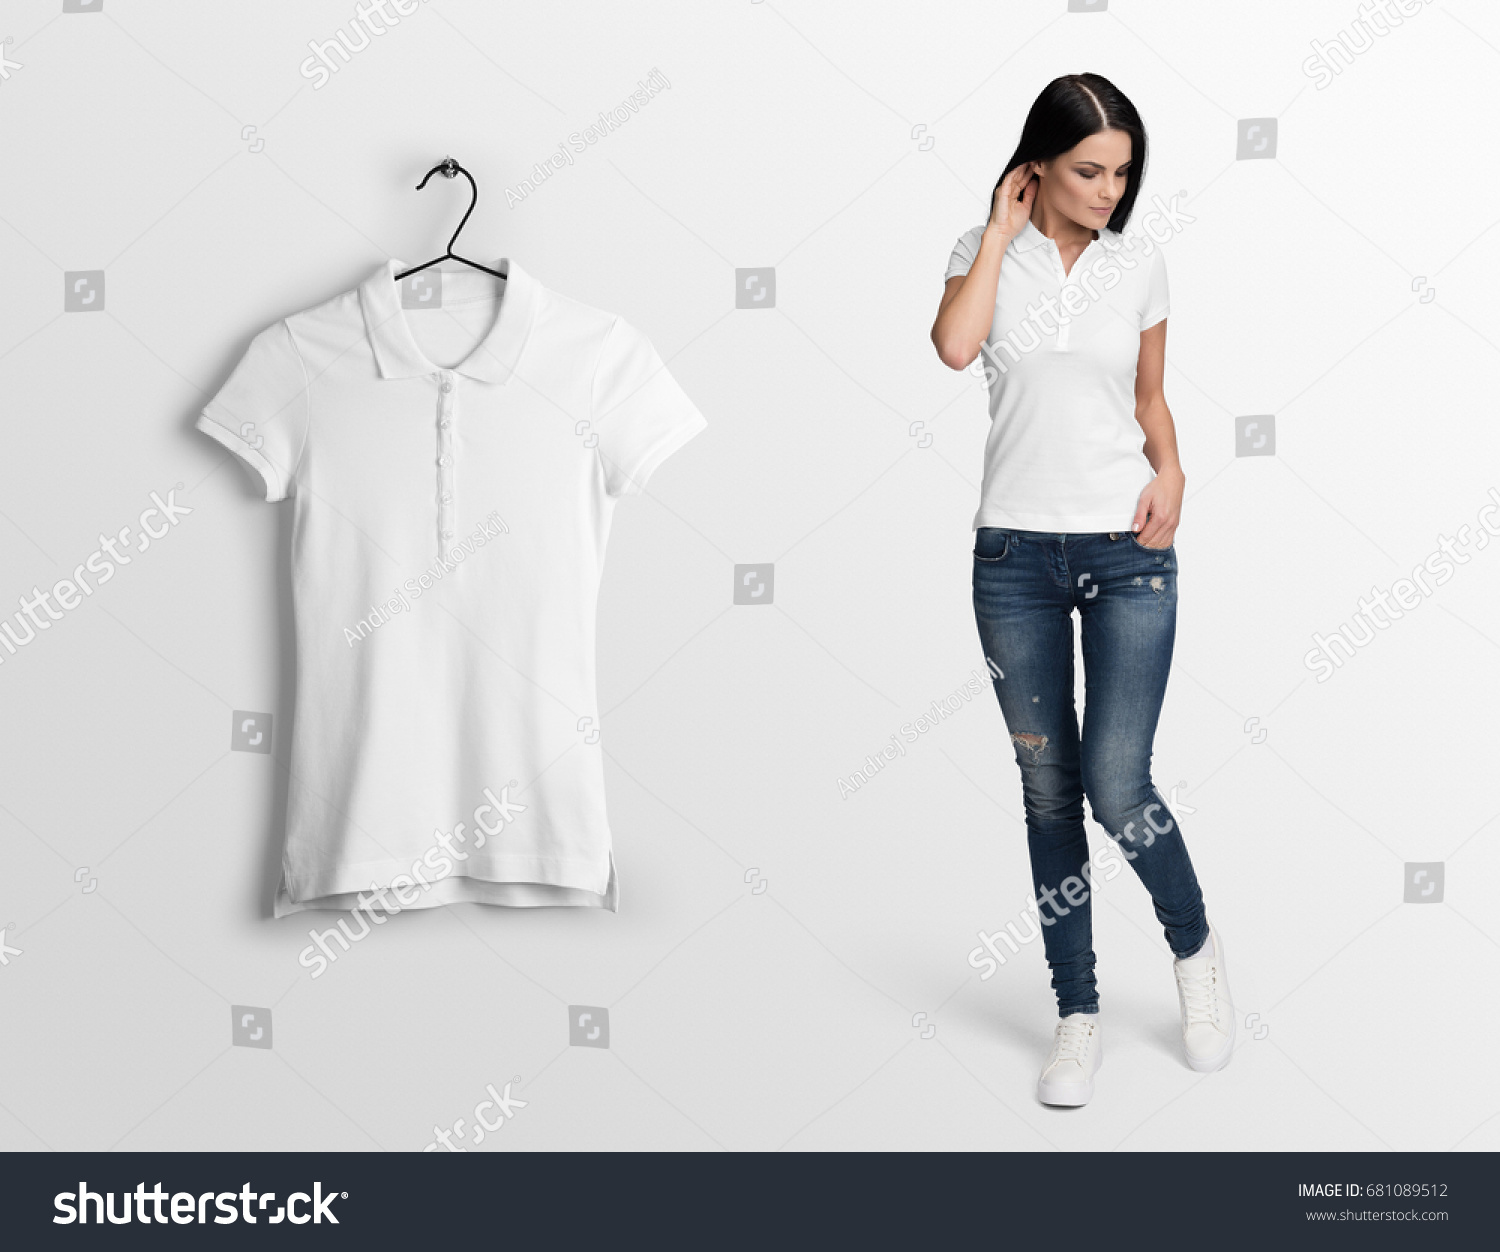 white polo outfit girl